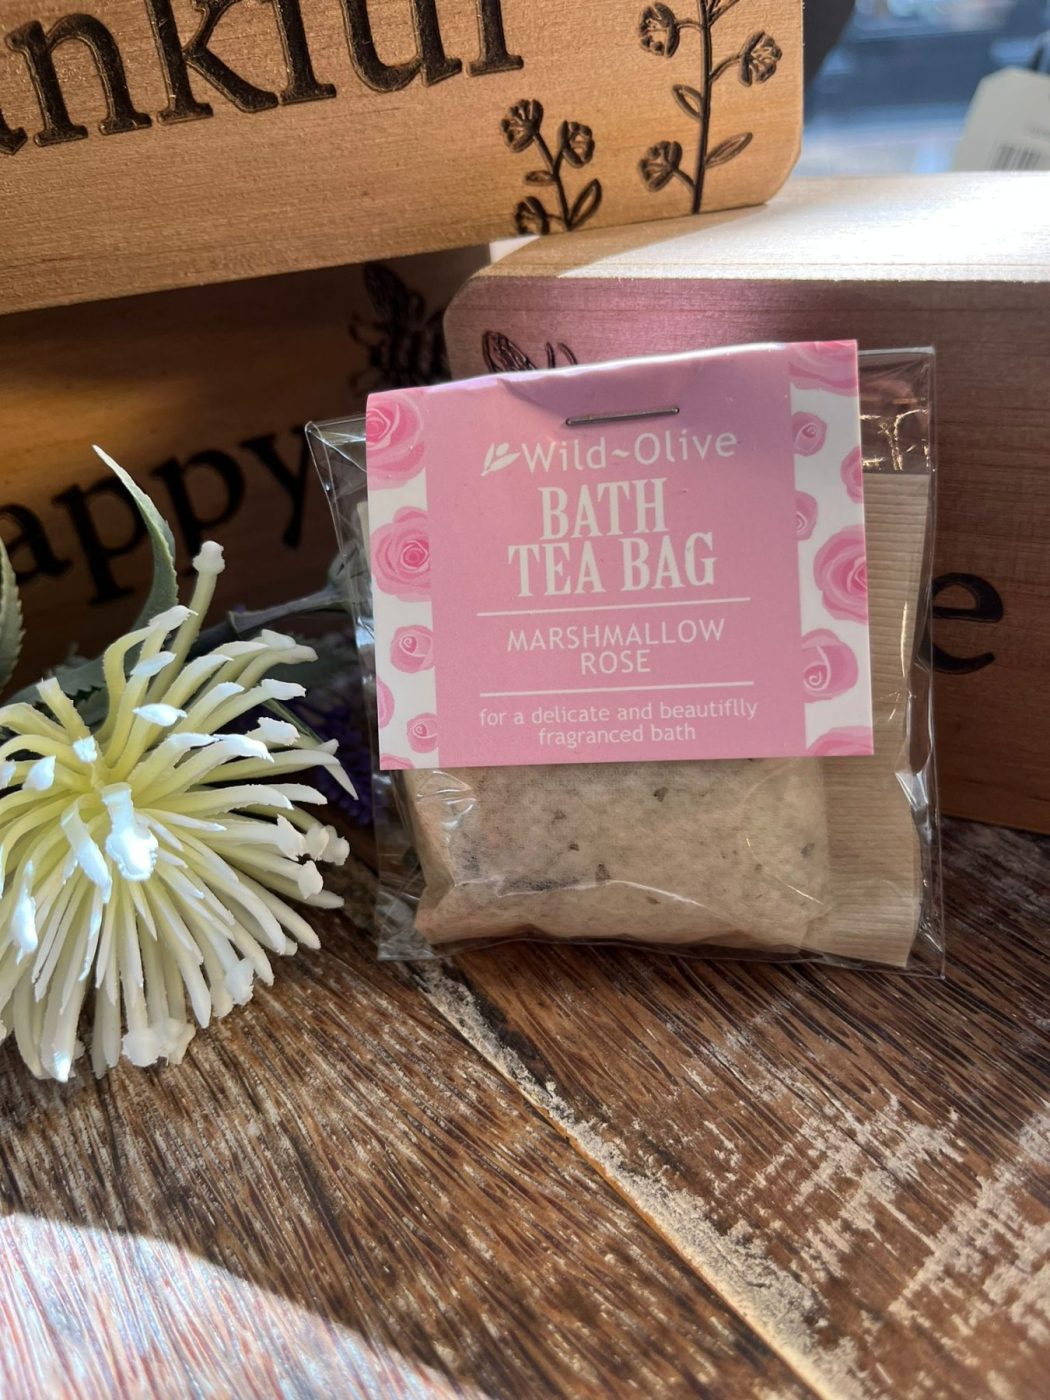 Bath Tea Bag Marshmallow Rose